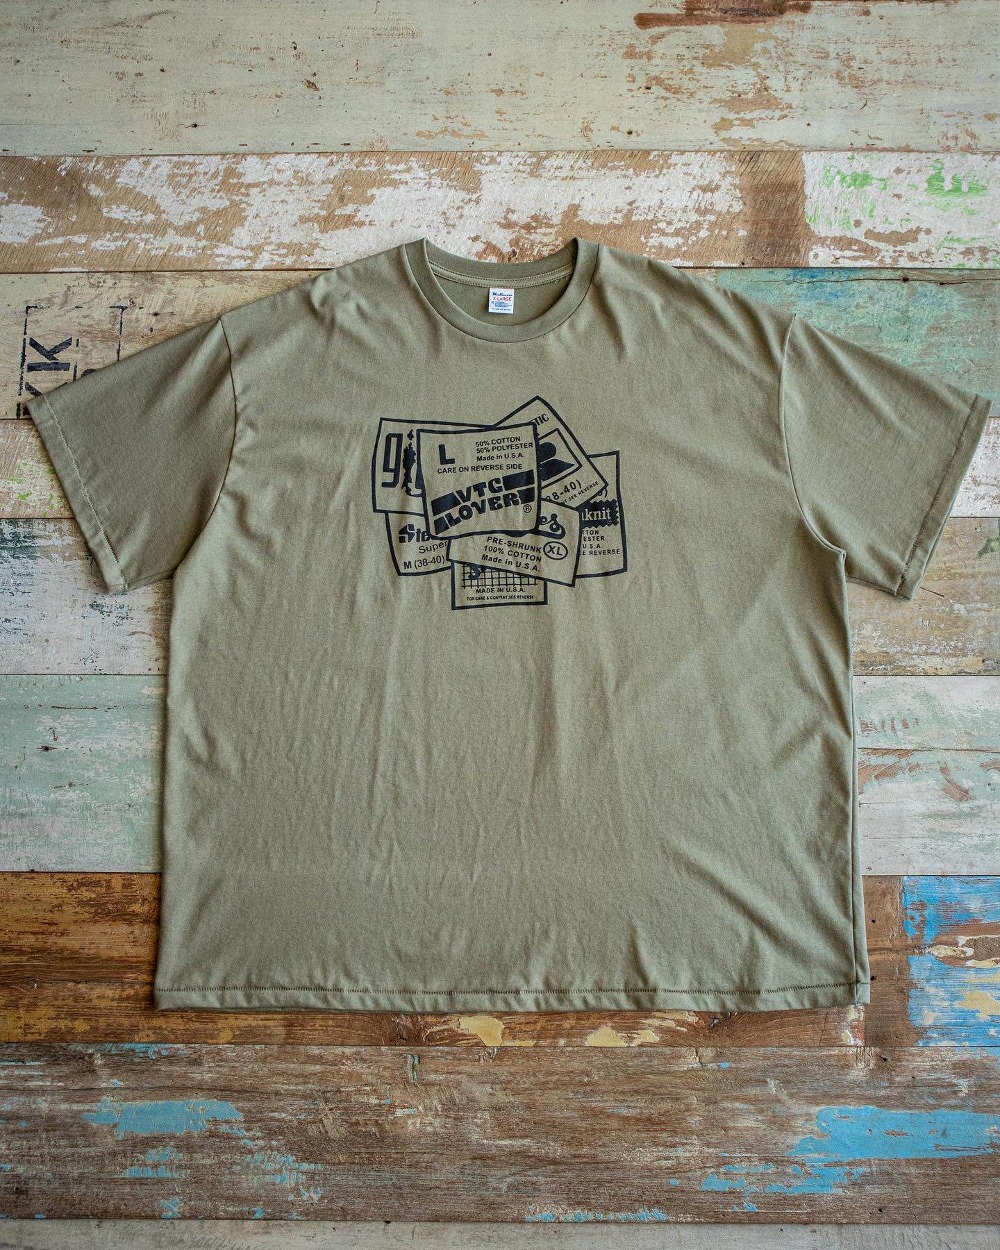 DOUBLEARMS “VTG LOVER” Single-Stitch T-Shirt (Sage green) (L/XL)